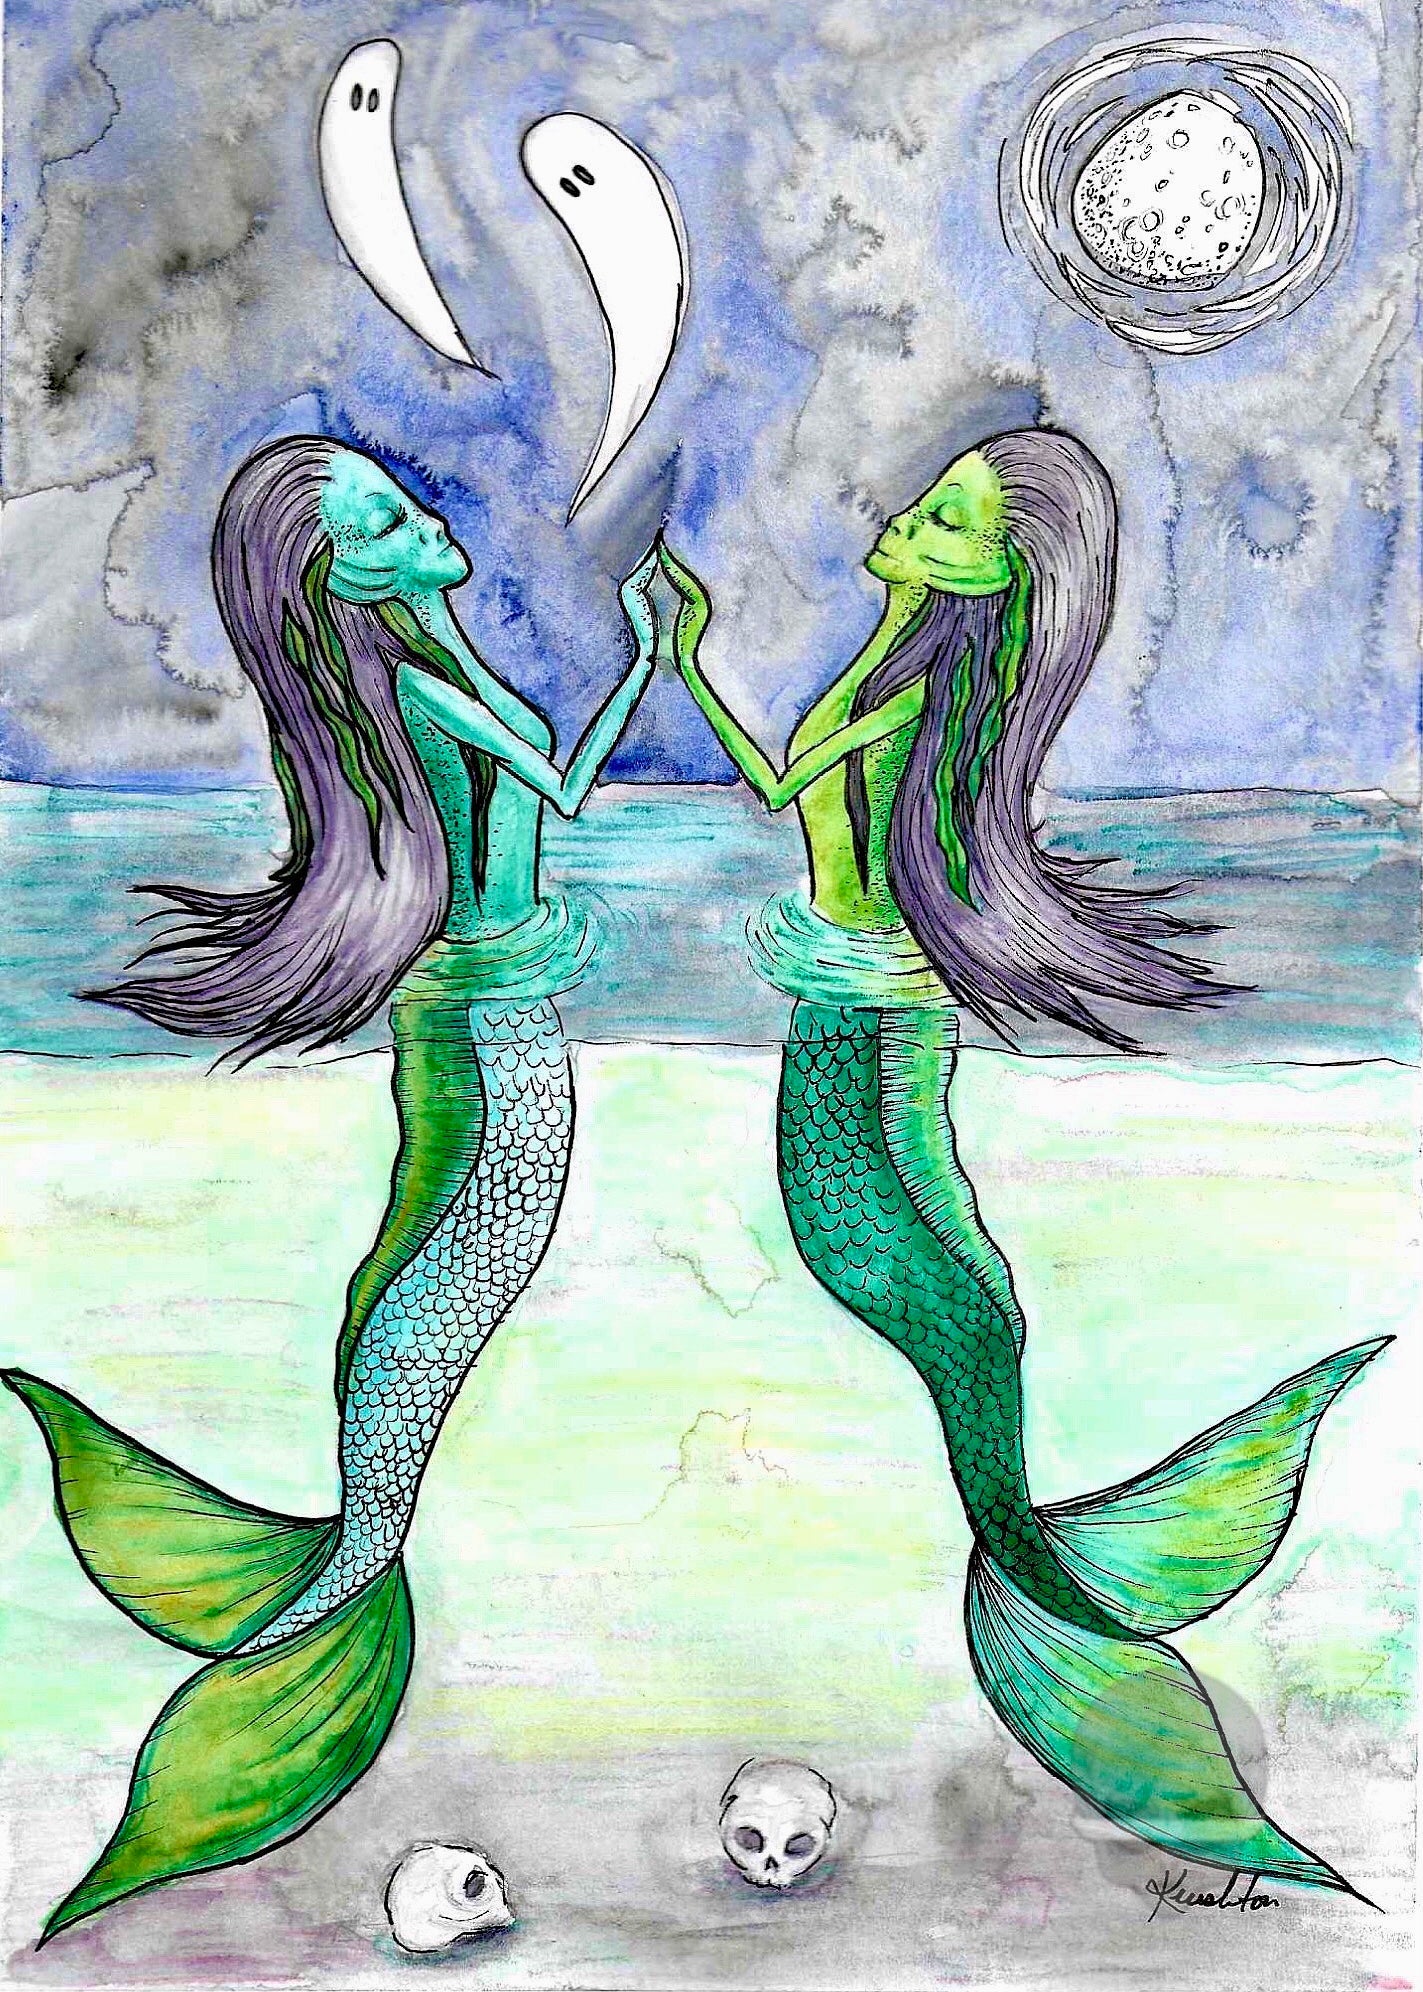 ‘twins of the sea’ - print